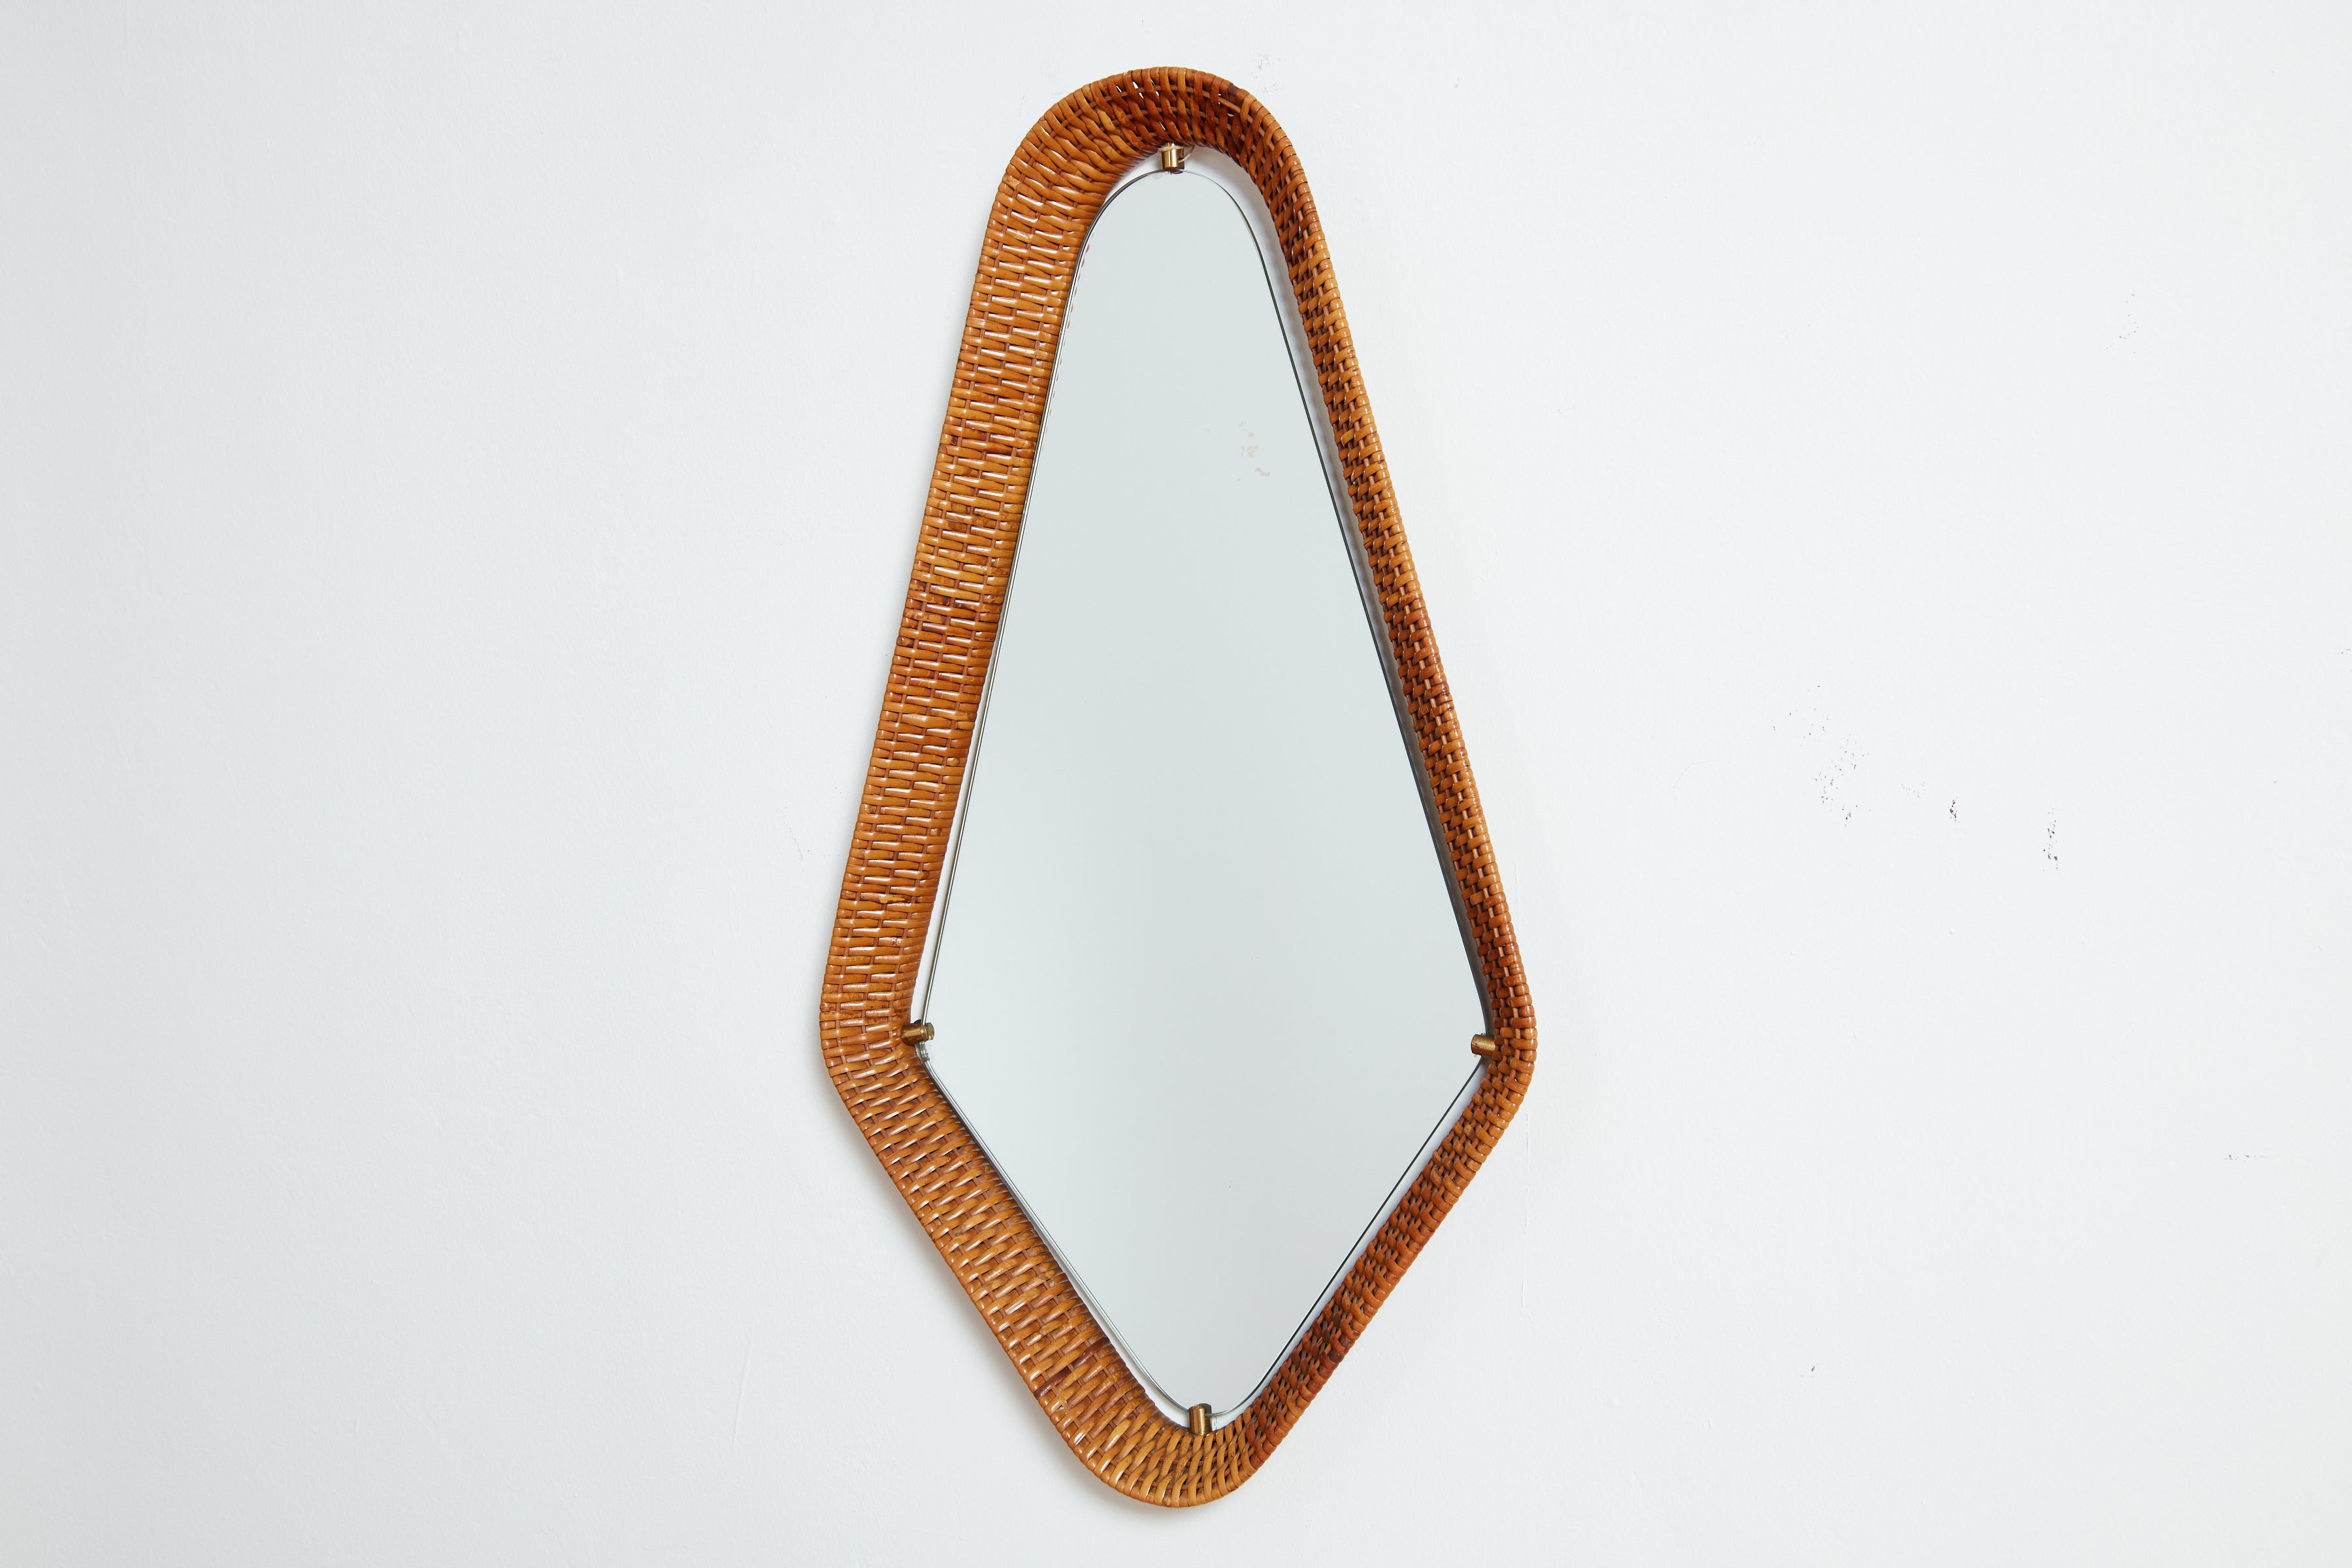 Italian woven wicker mirror in wonderful diamond shape 
Brass clasp hardware with floating mirror 
Great patina.